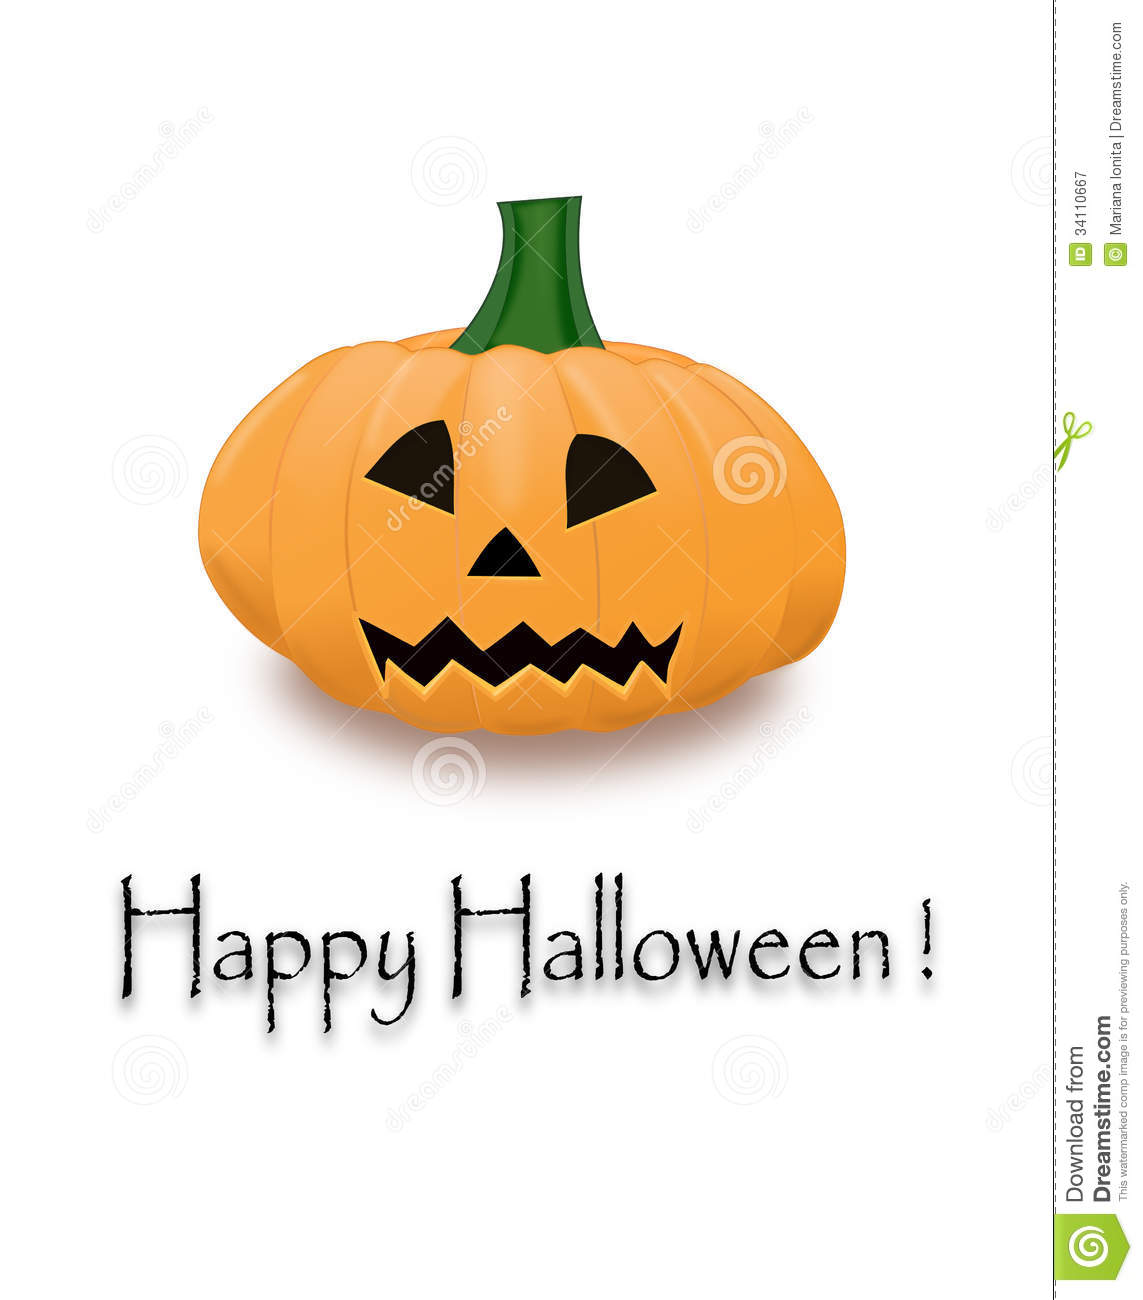 Happy Halloween   Royalty Free Stock Photography   Image  34110667